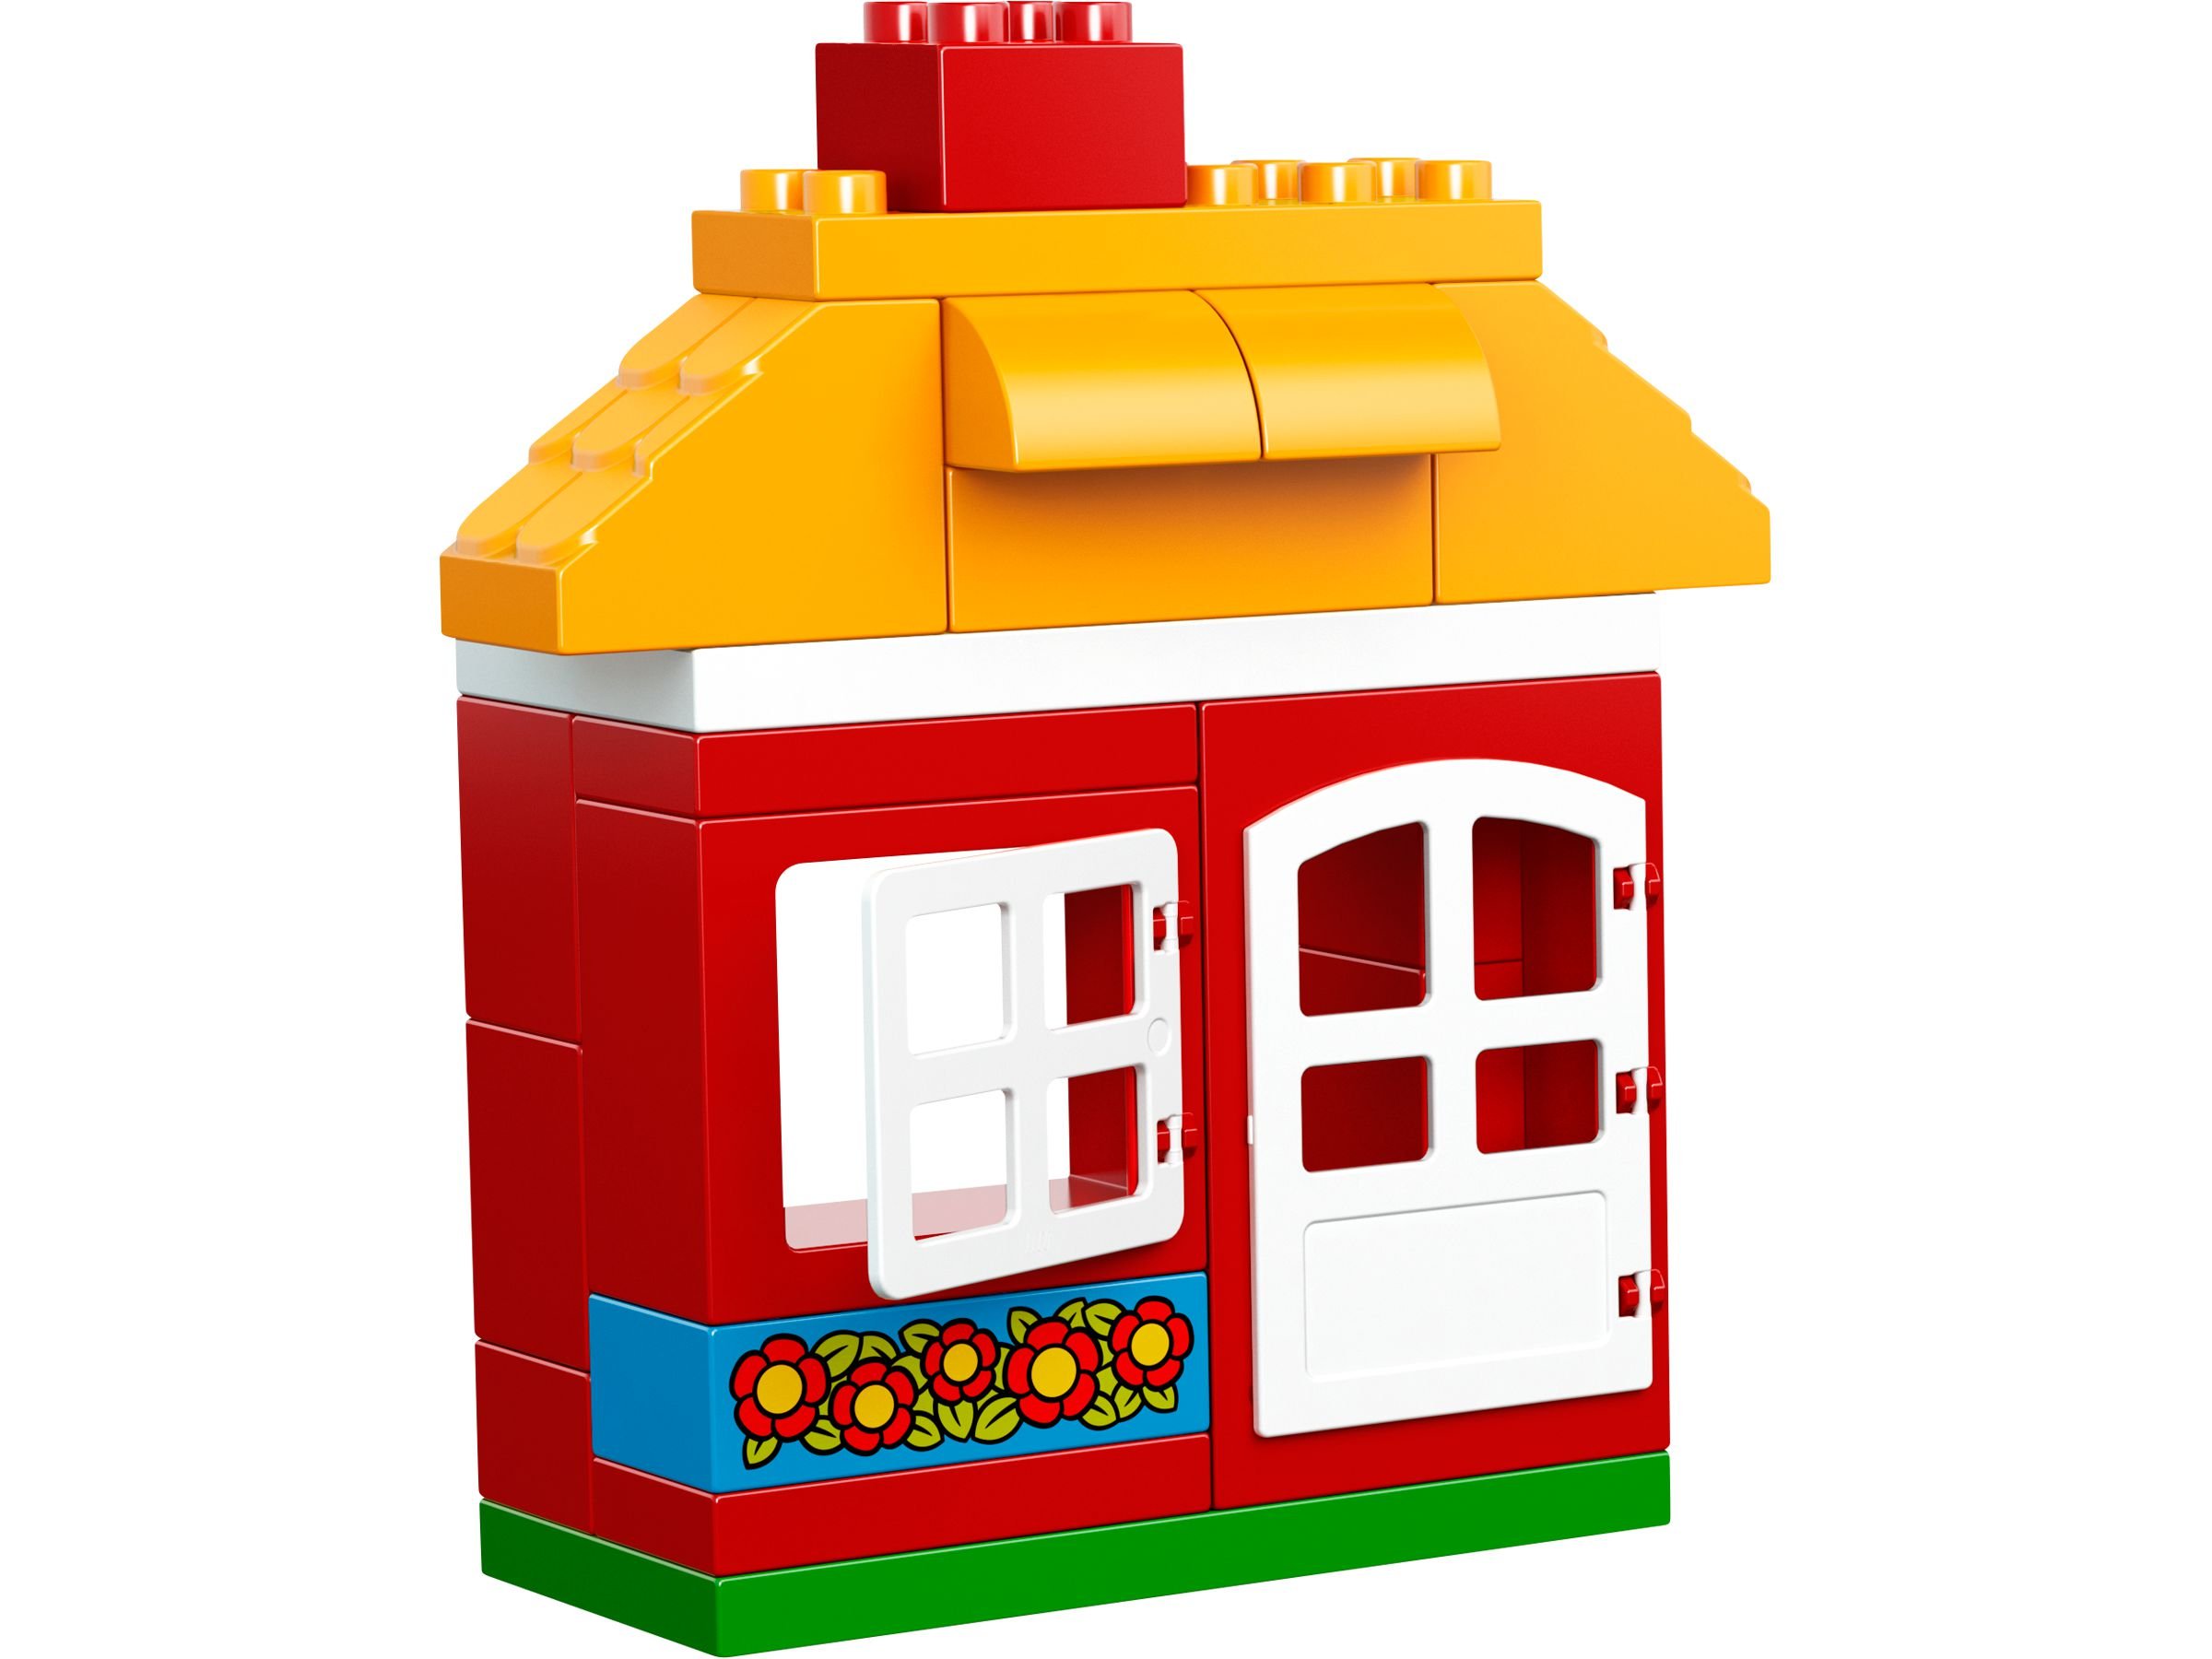 LEGO Duplo 10525 Großer Bauernhof LEGO_10525_alt3.jpg